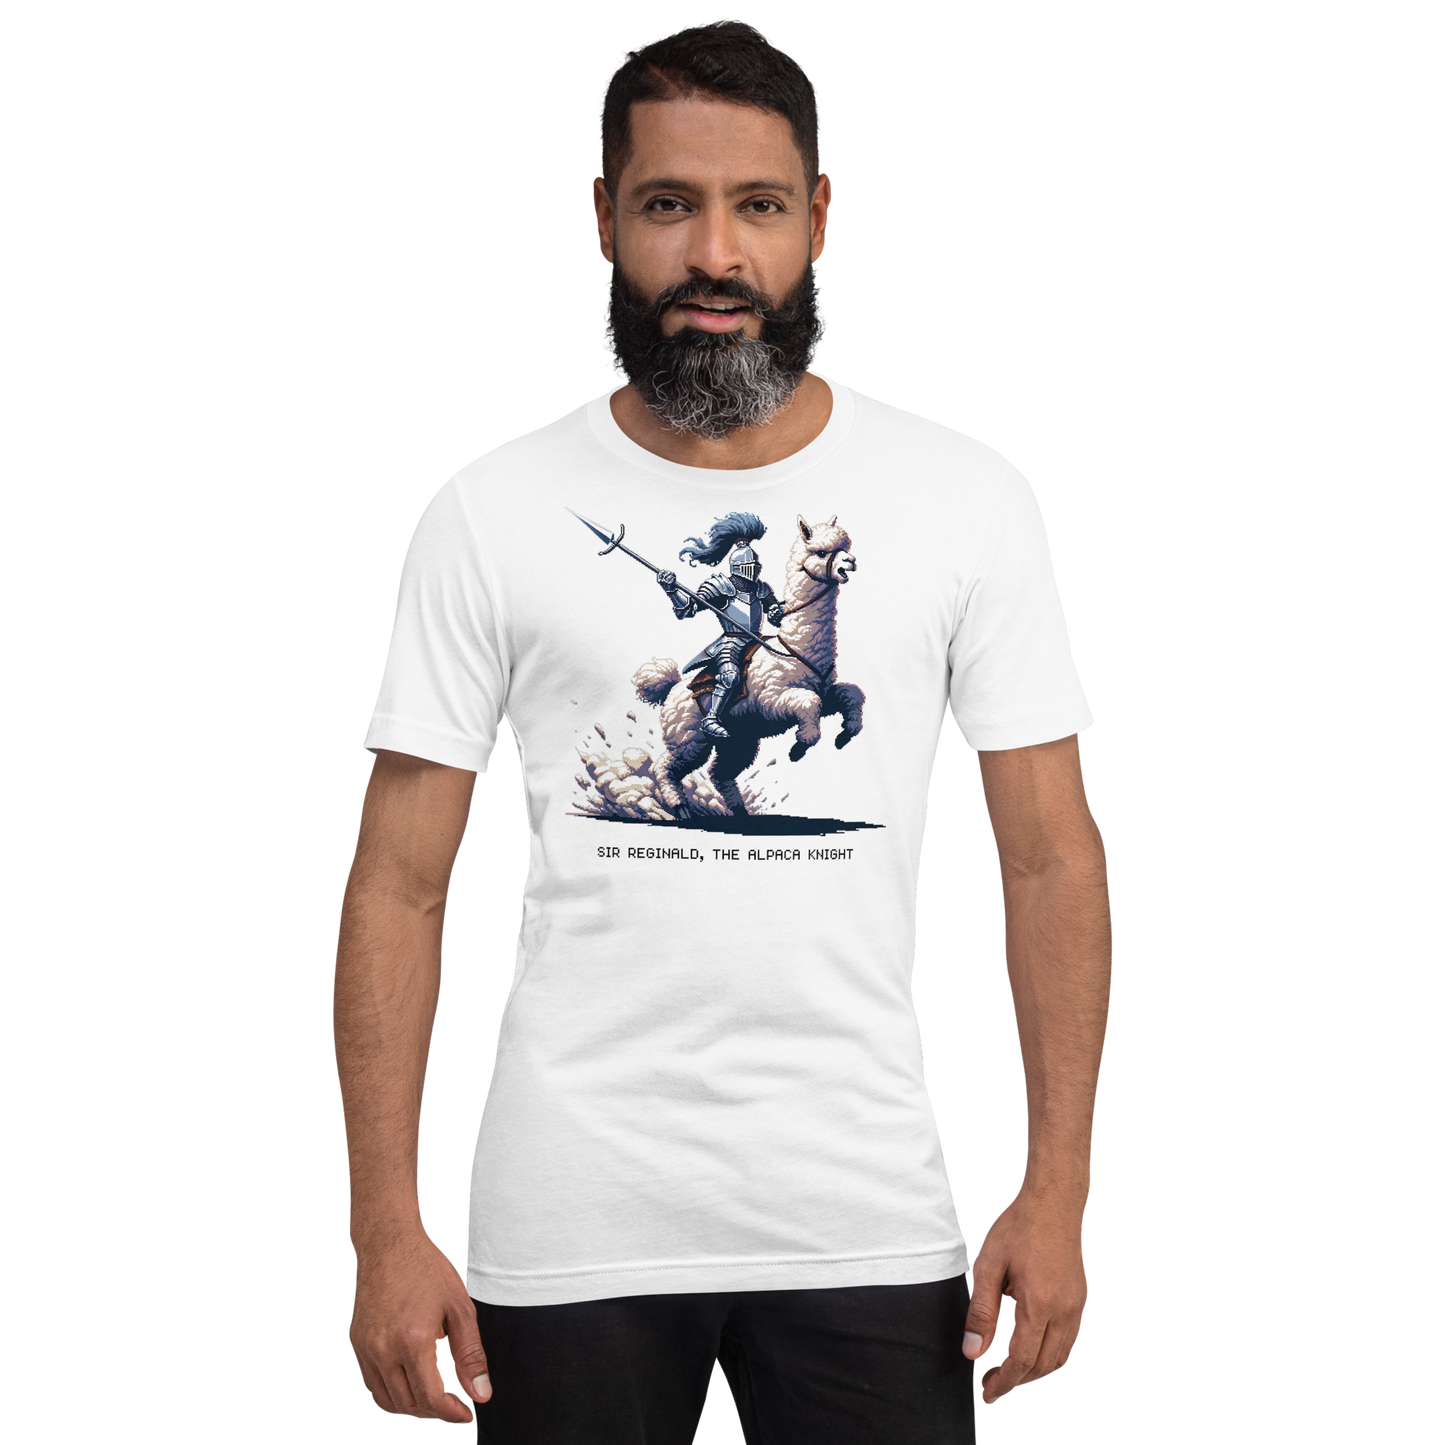 "Alpaca Knight" Unisex Shirt w/ Text